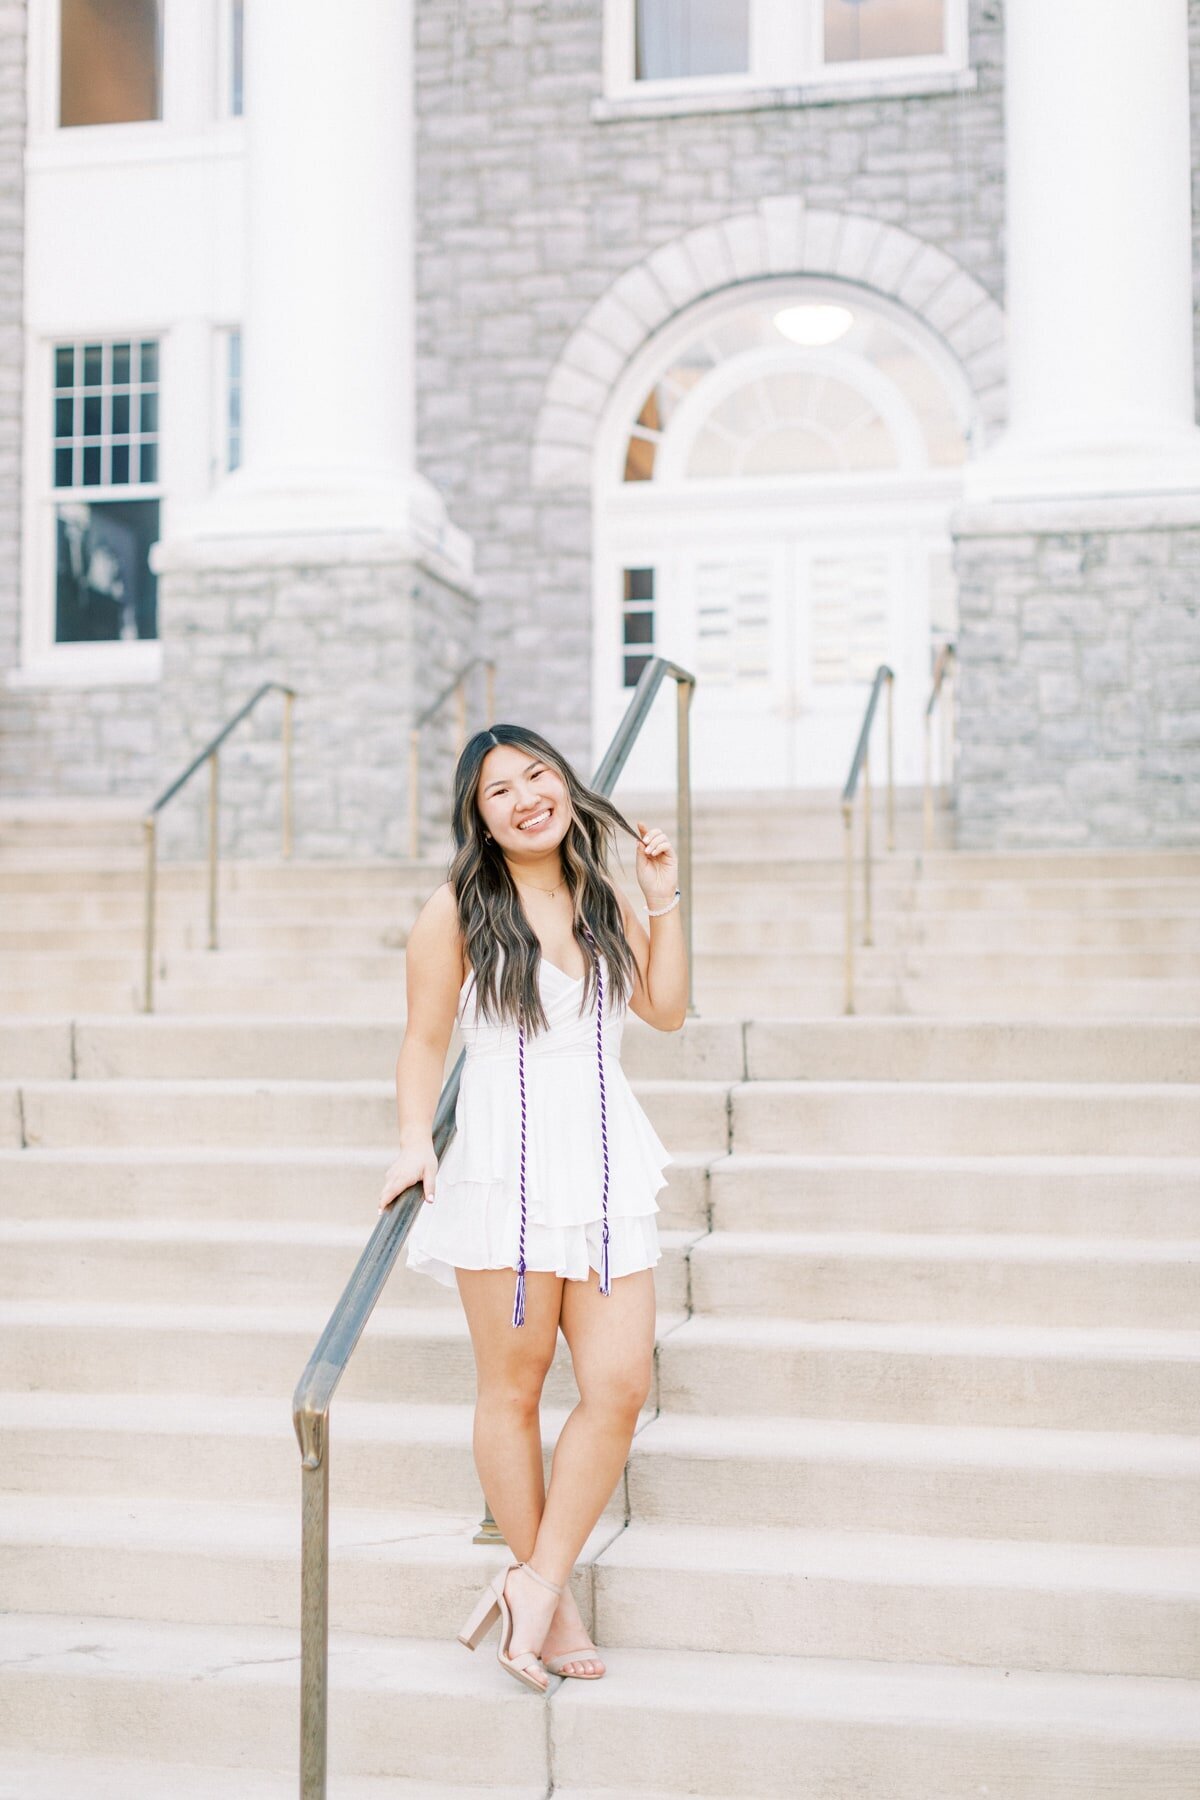 A Harrisonburg senior gets her photos taken on the steps of James Madison Universities Wilson.